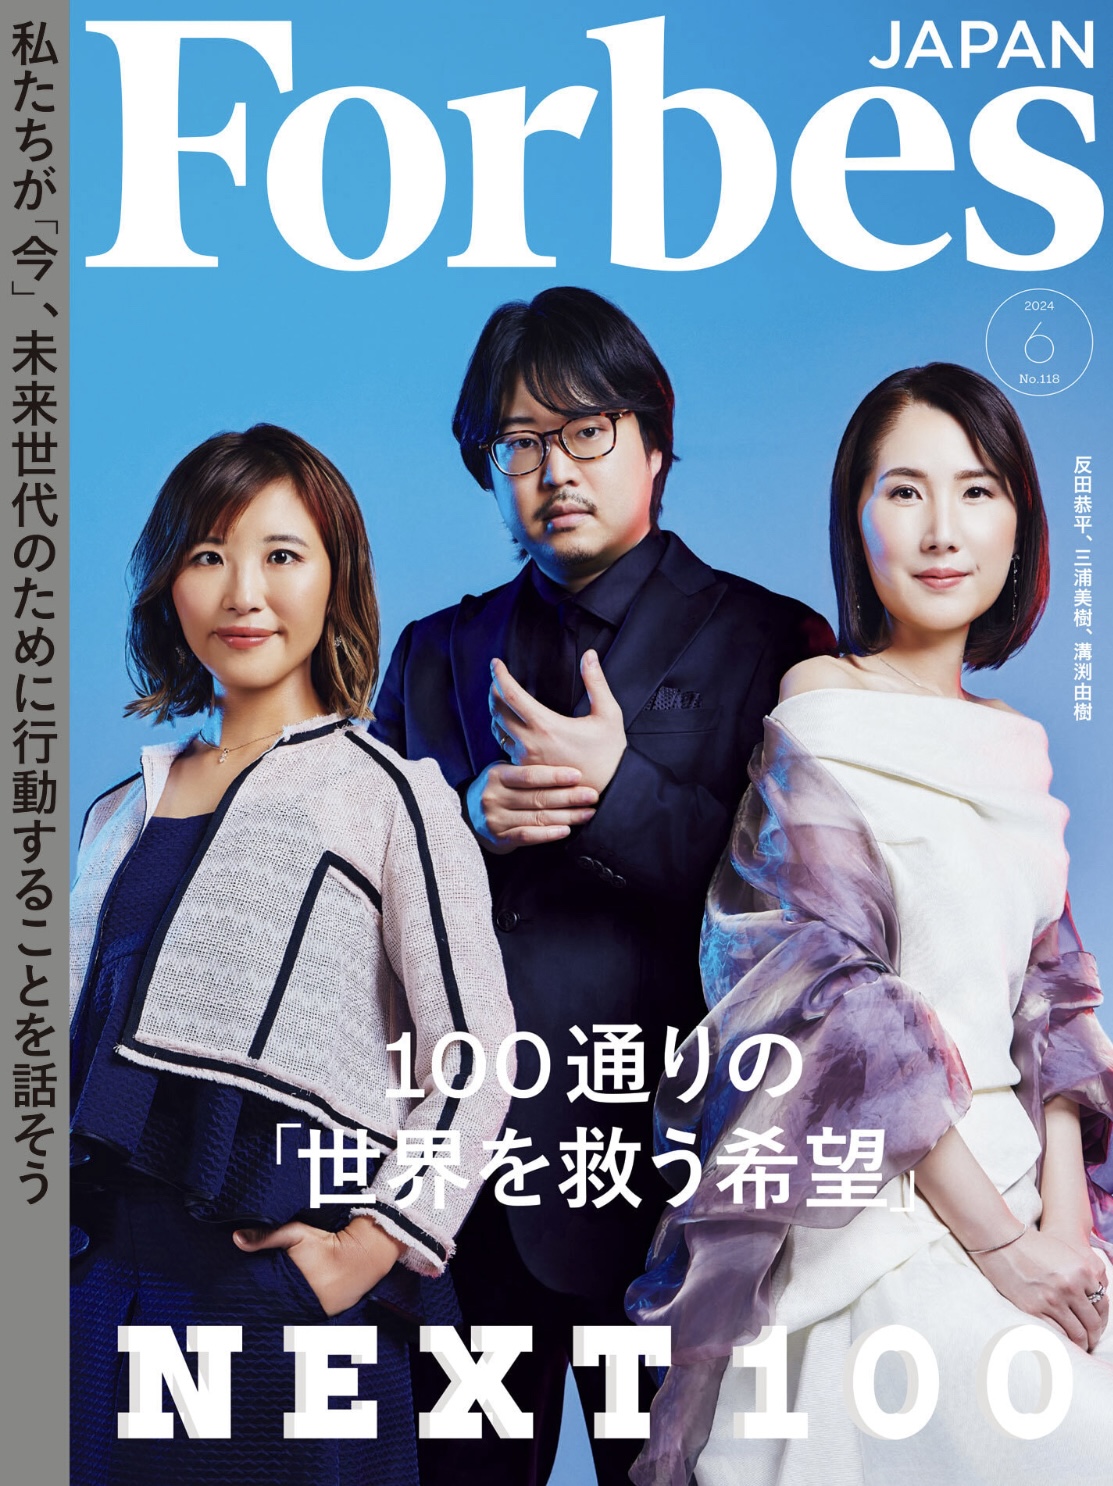 Forbes JAPAN 6月号「NEXT TREND」に掲載されました。